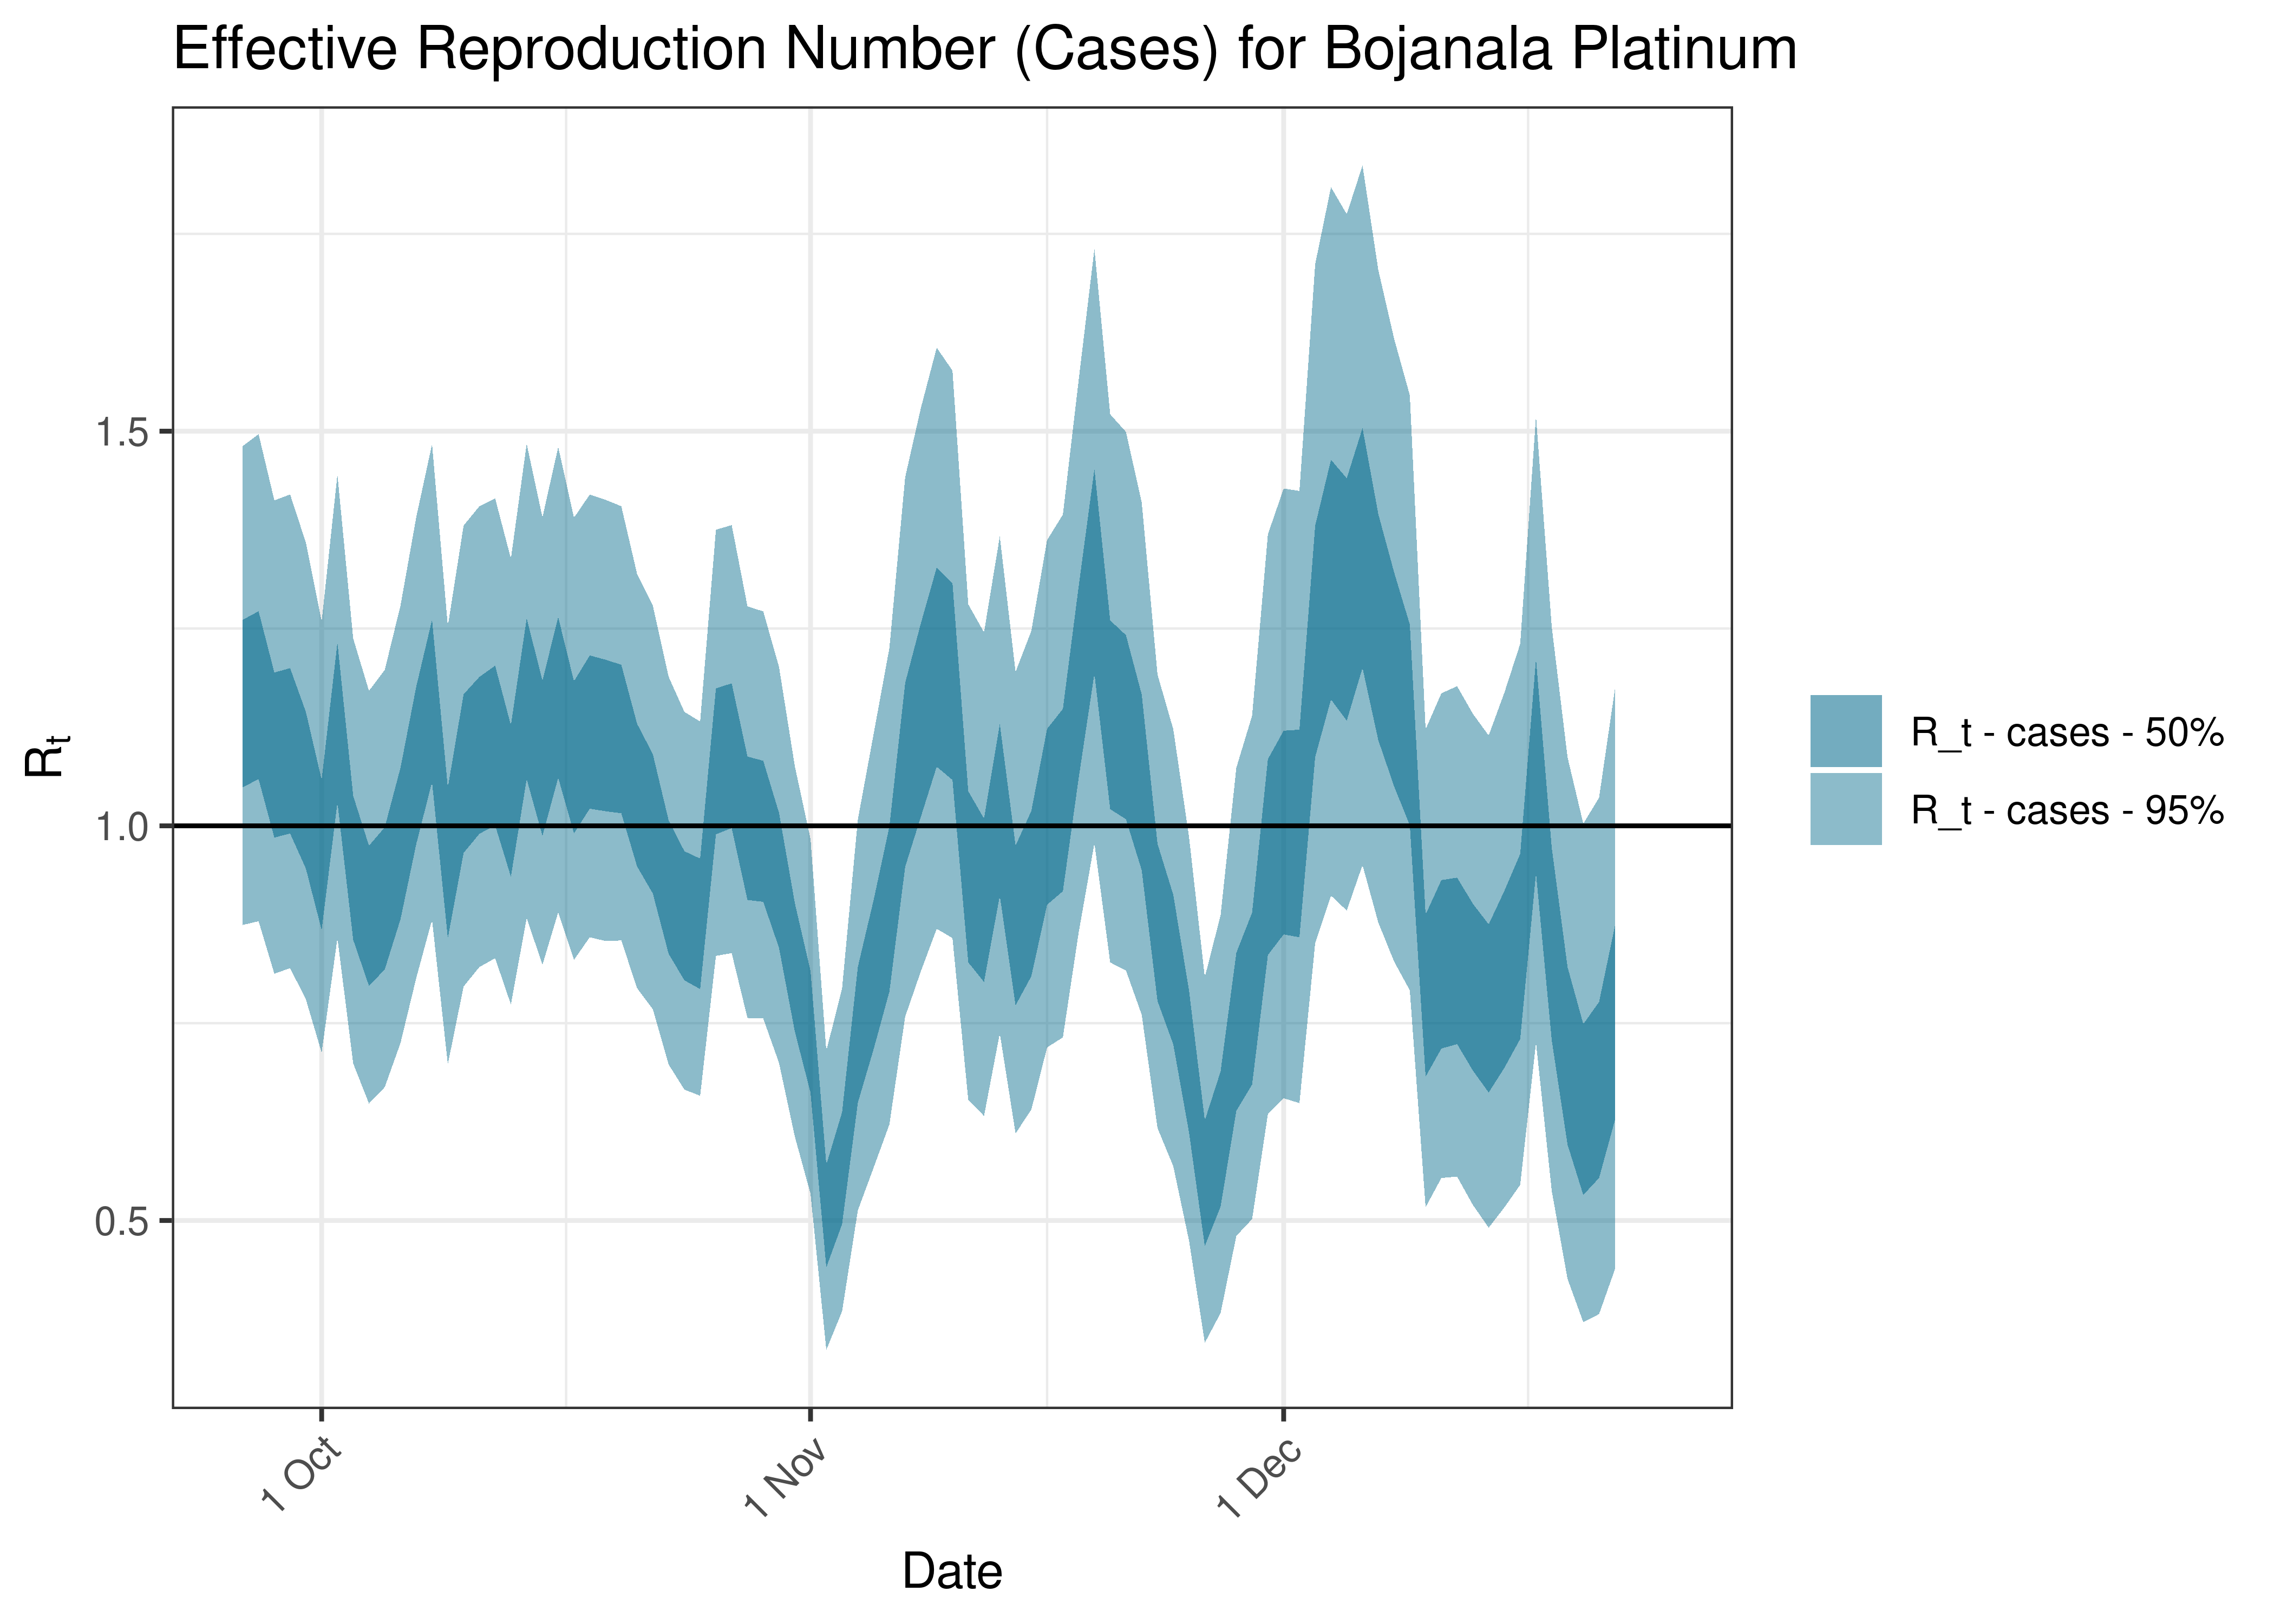 Estimated Effective Reproduction Number Based on Cases for Bojanala Platinum over last 90 days